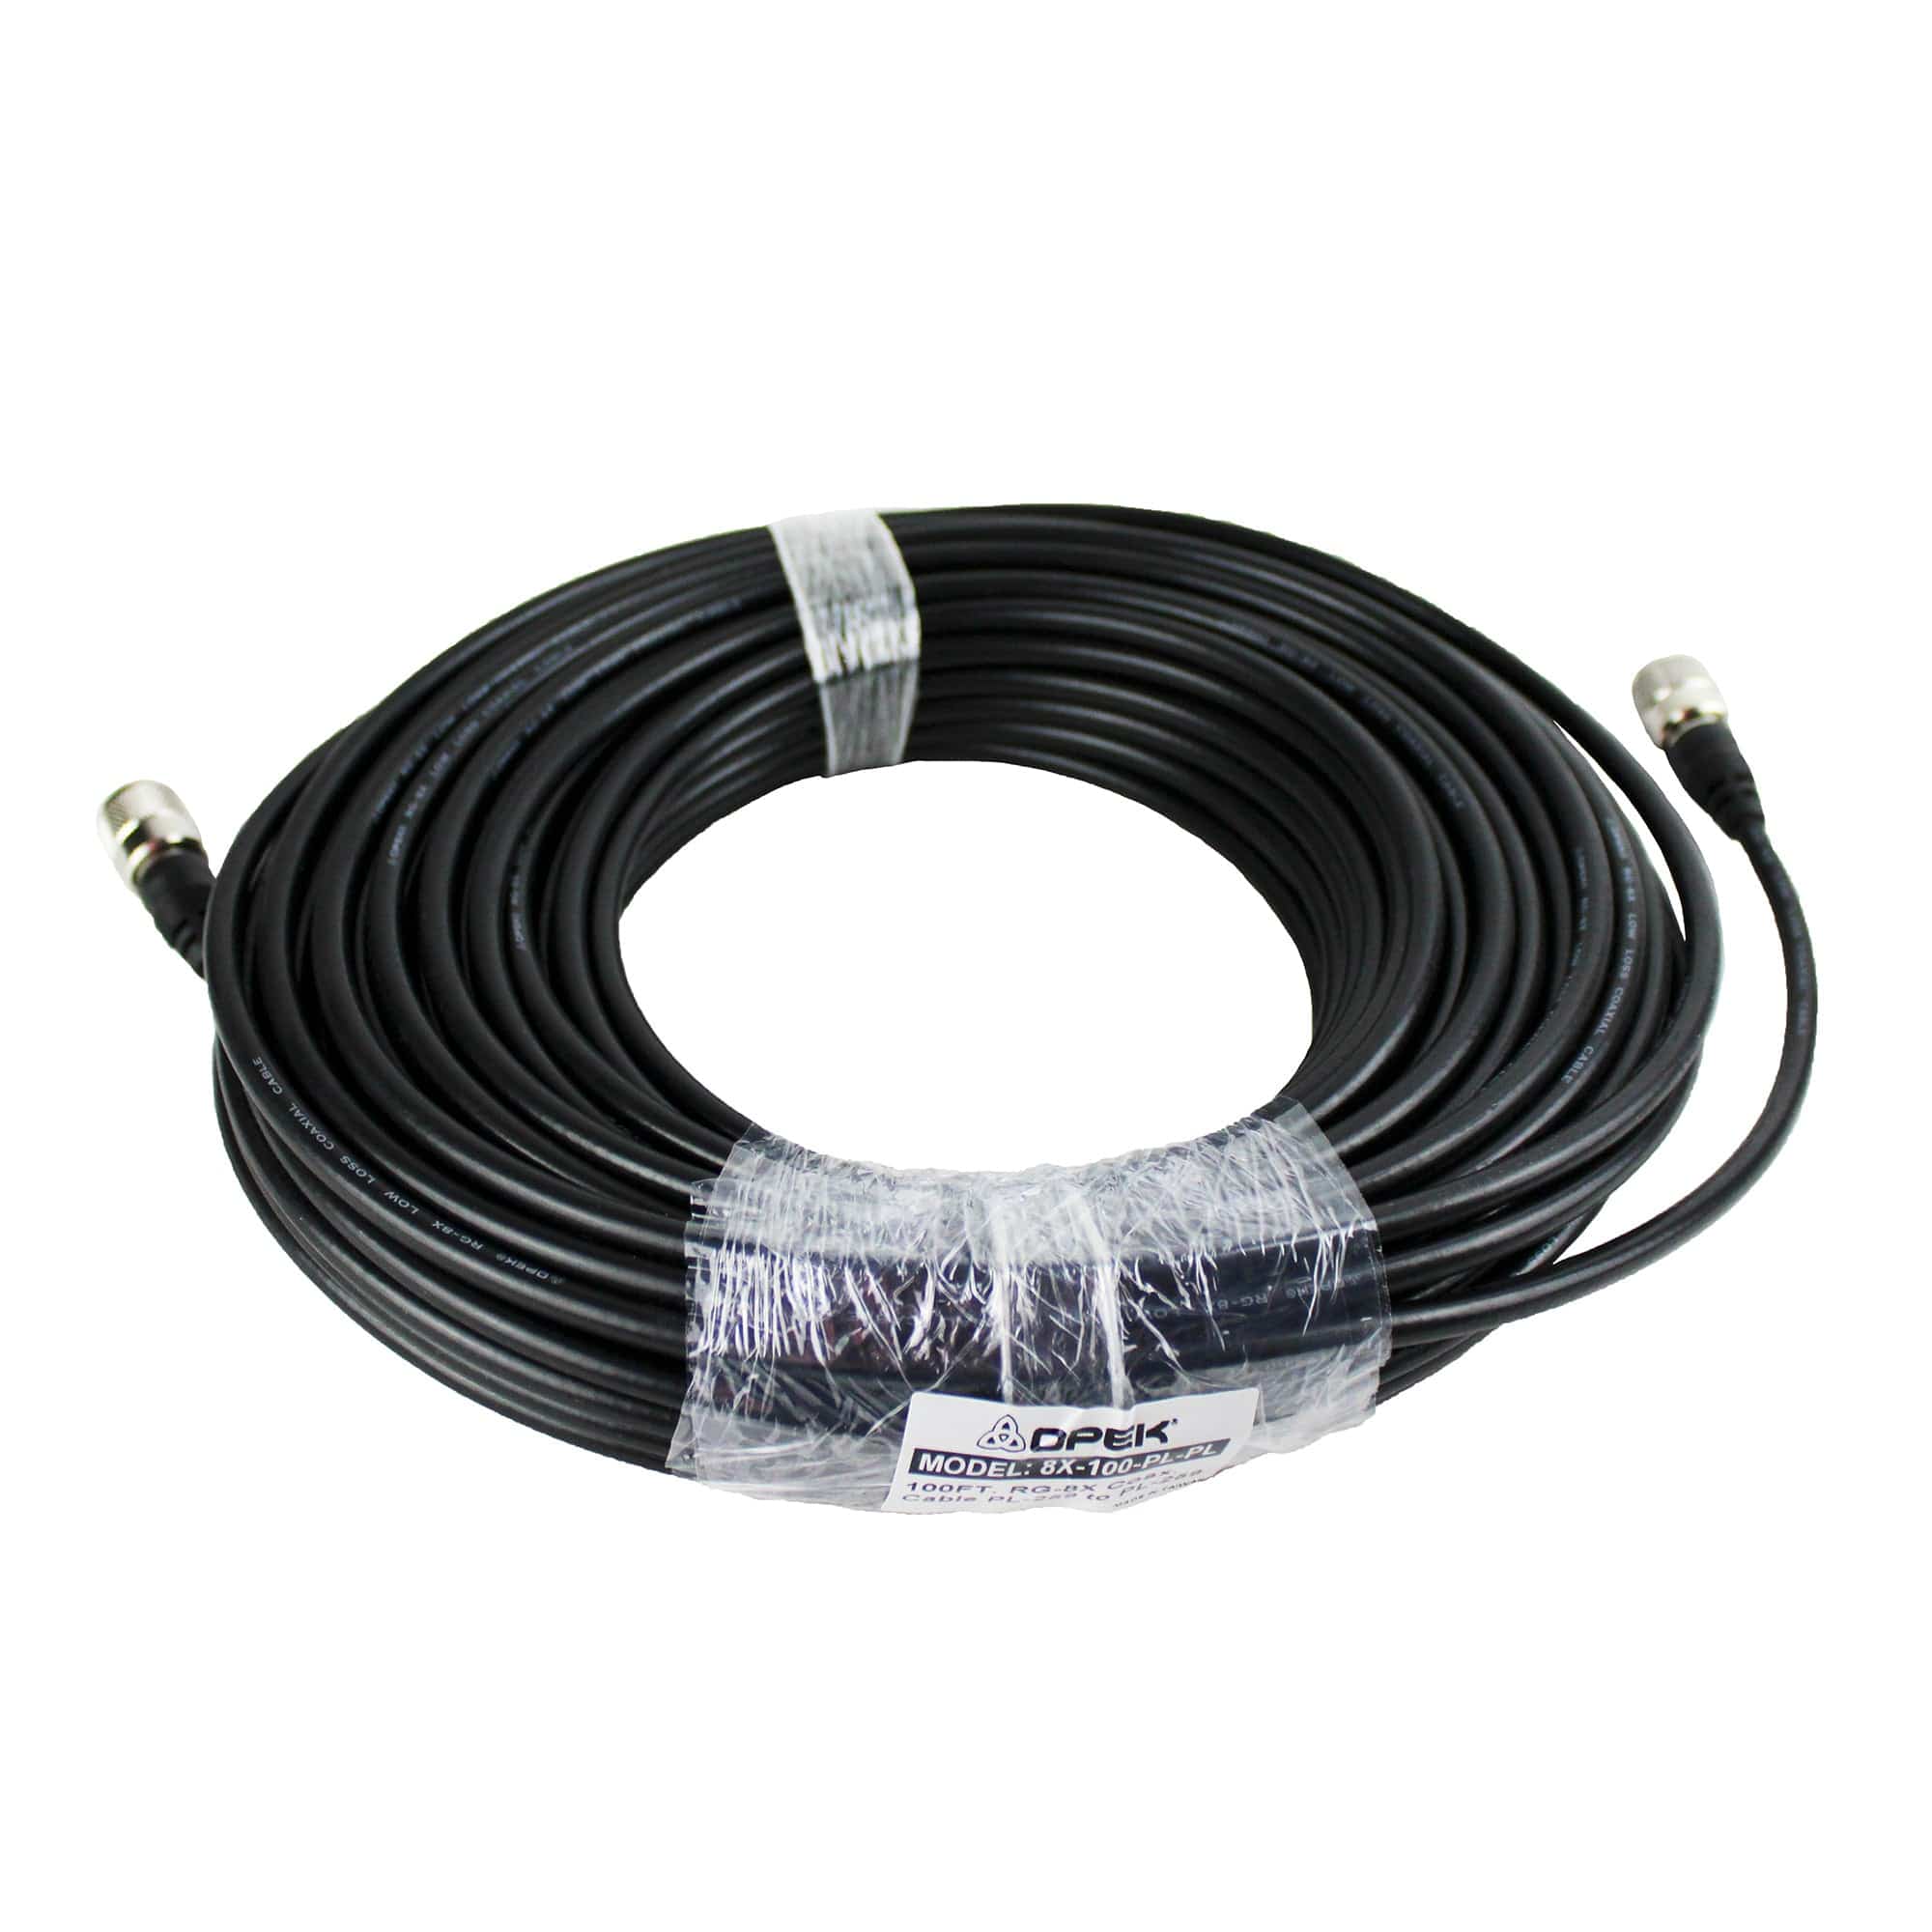 Airlink 8X-100-PL-PL 100 foot Coax Cable for CB / Ham Radio w/ PL259 Connectors - Workman